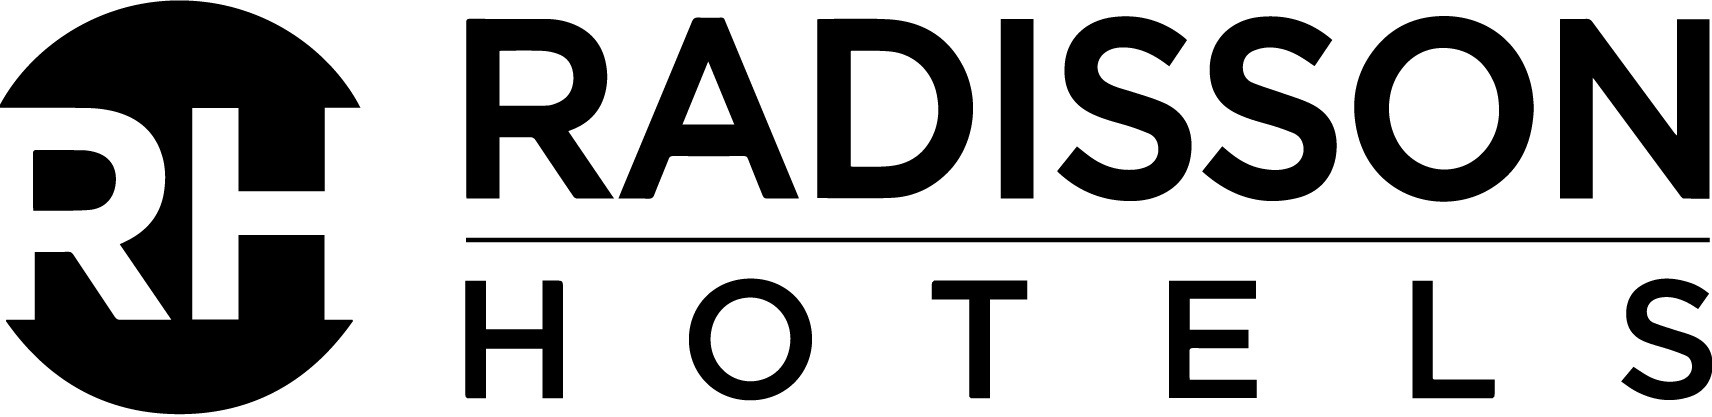 Logo Radisson Hotels - Clientes Auditecnic